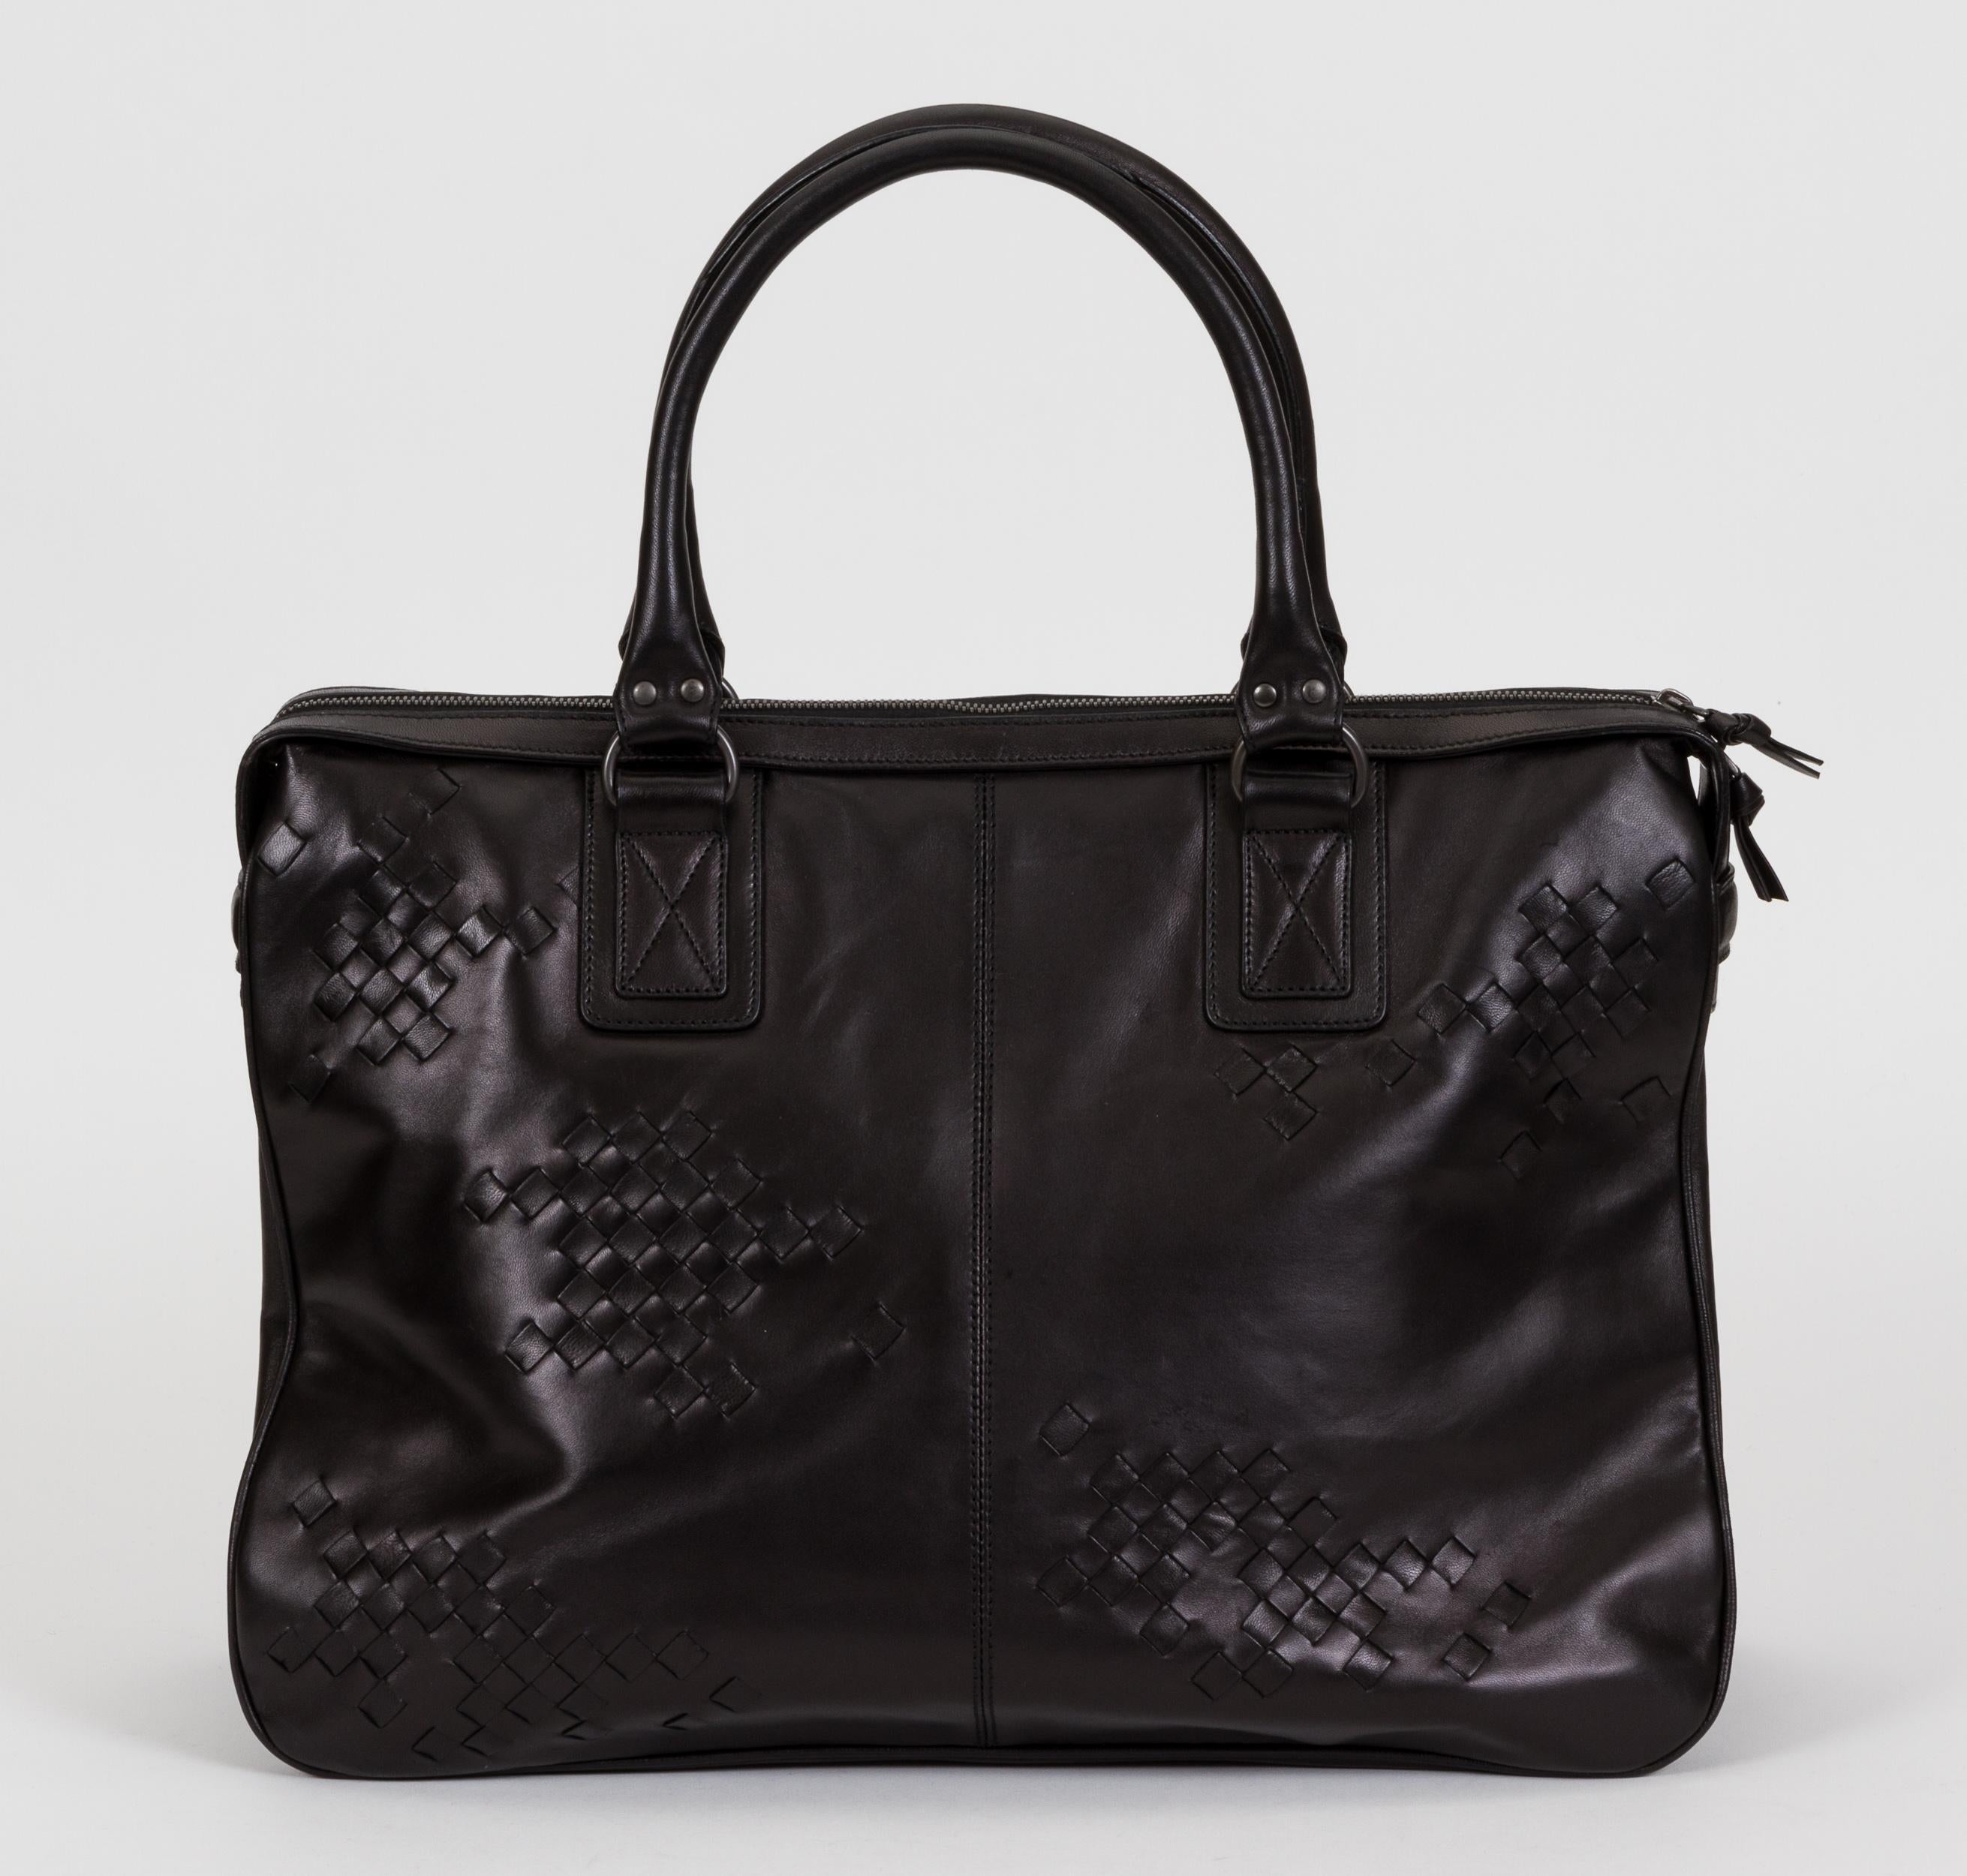 Bottega Veneta Black Leather Handbag In Good Condition For Sale In West Hollywood, CA